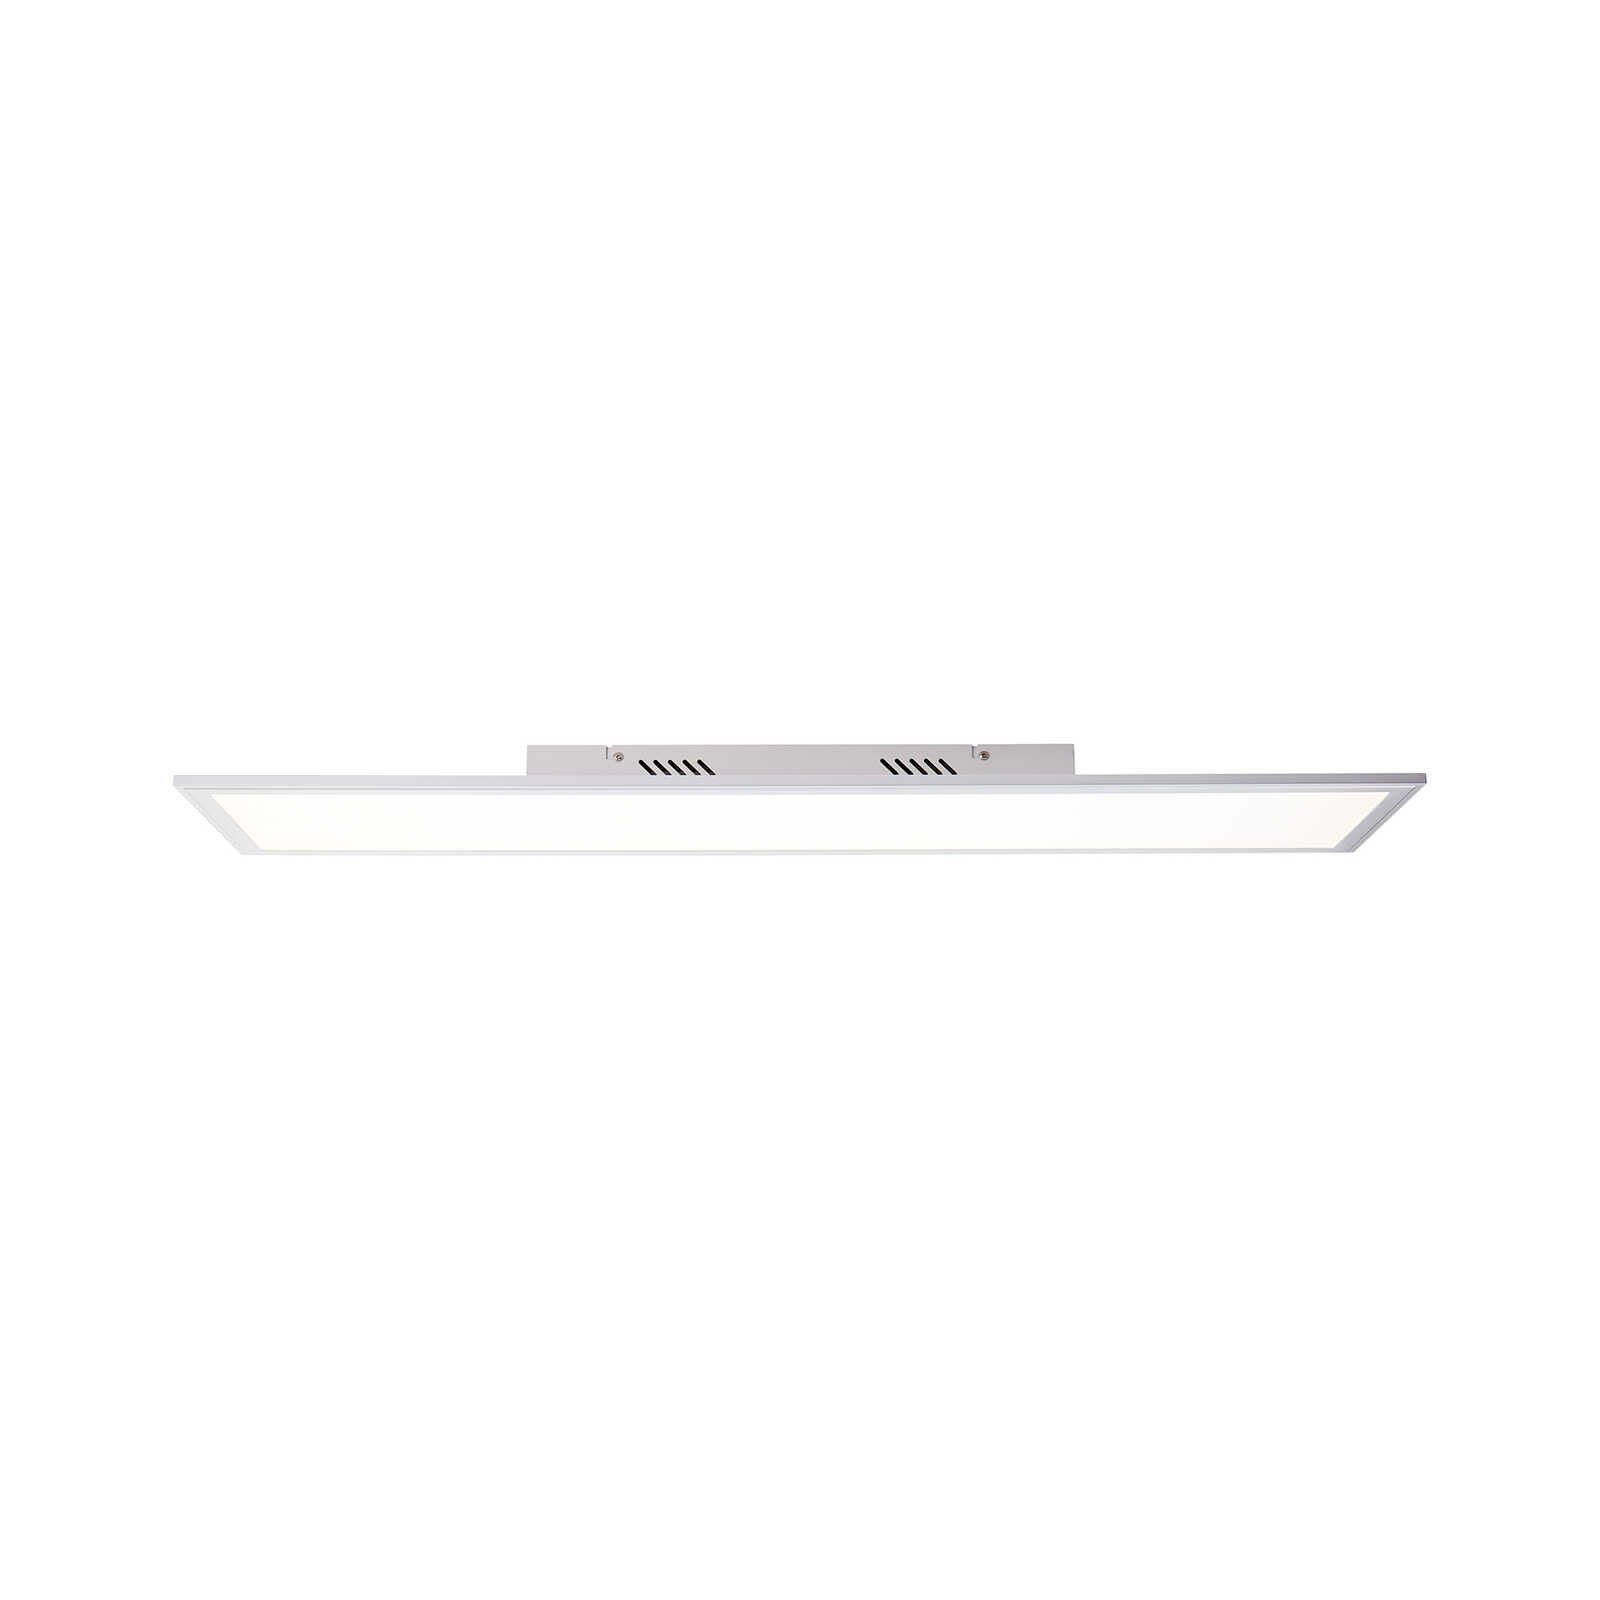 Plastic ceiling light - Gloria 2 - Silver
